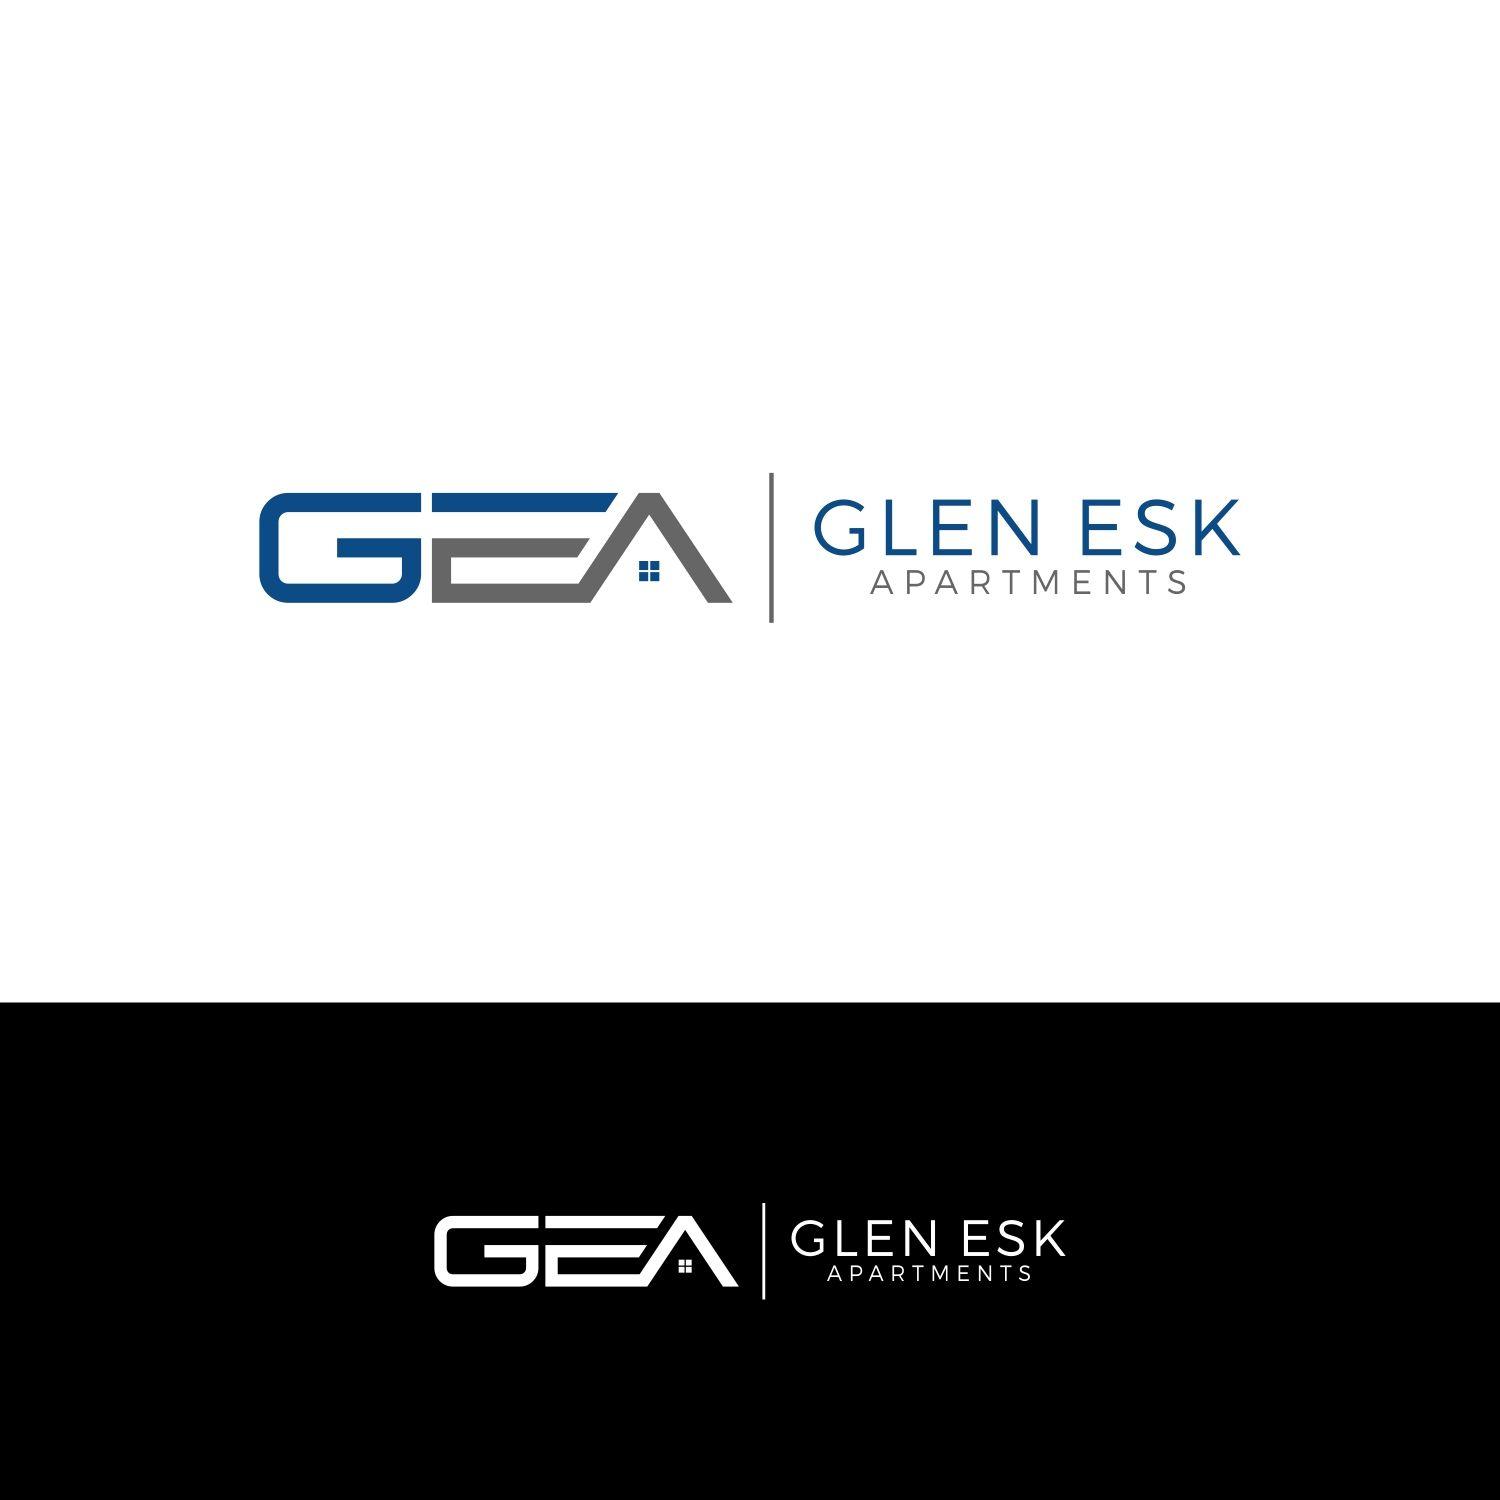 Modern Apartment Logo - Serious, Modern, Apartment Logo Design for Glen Esk Apartments or